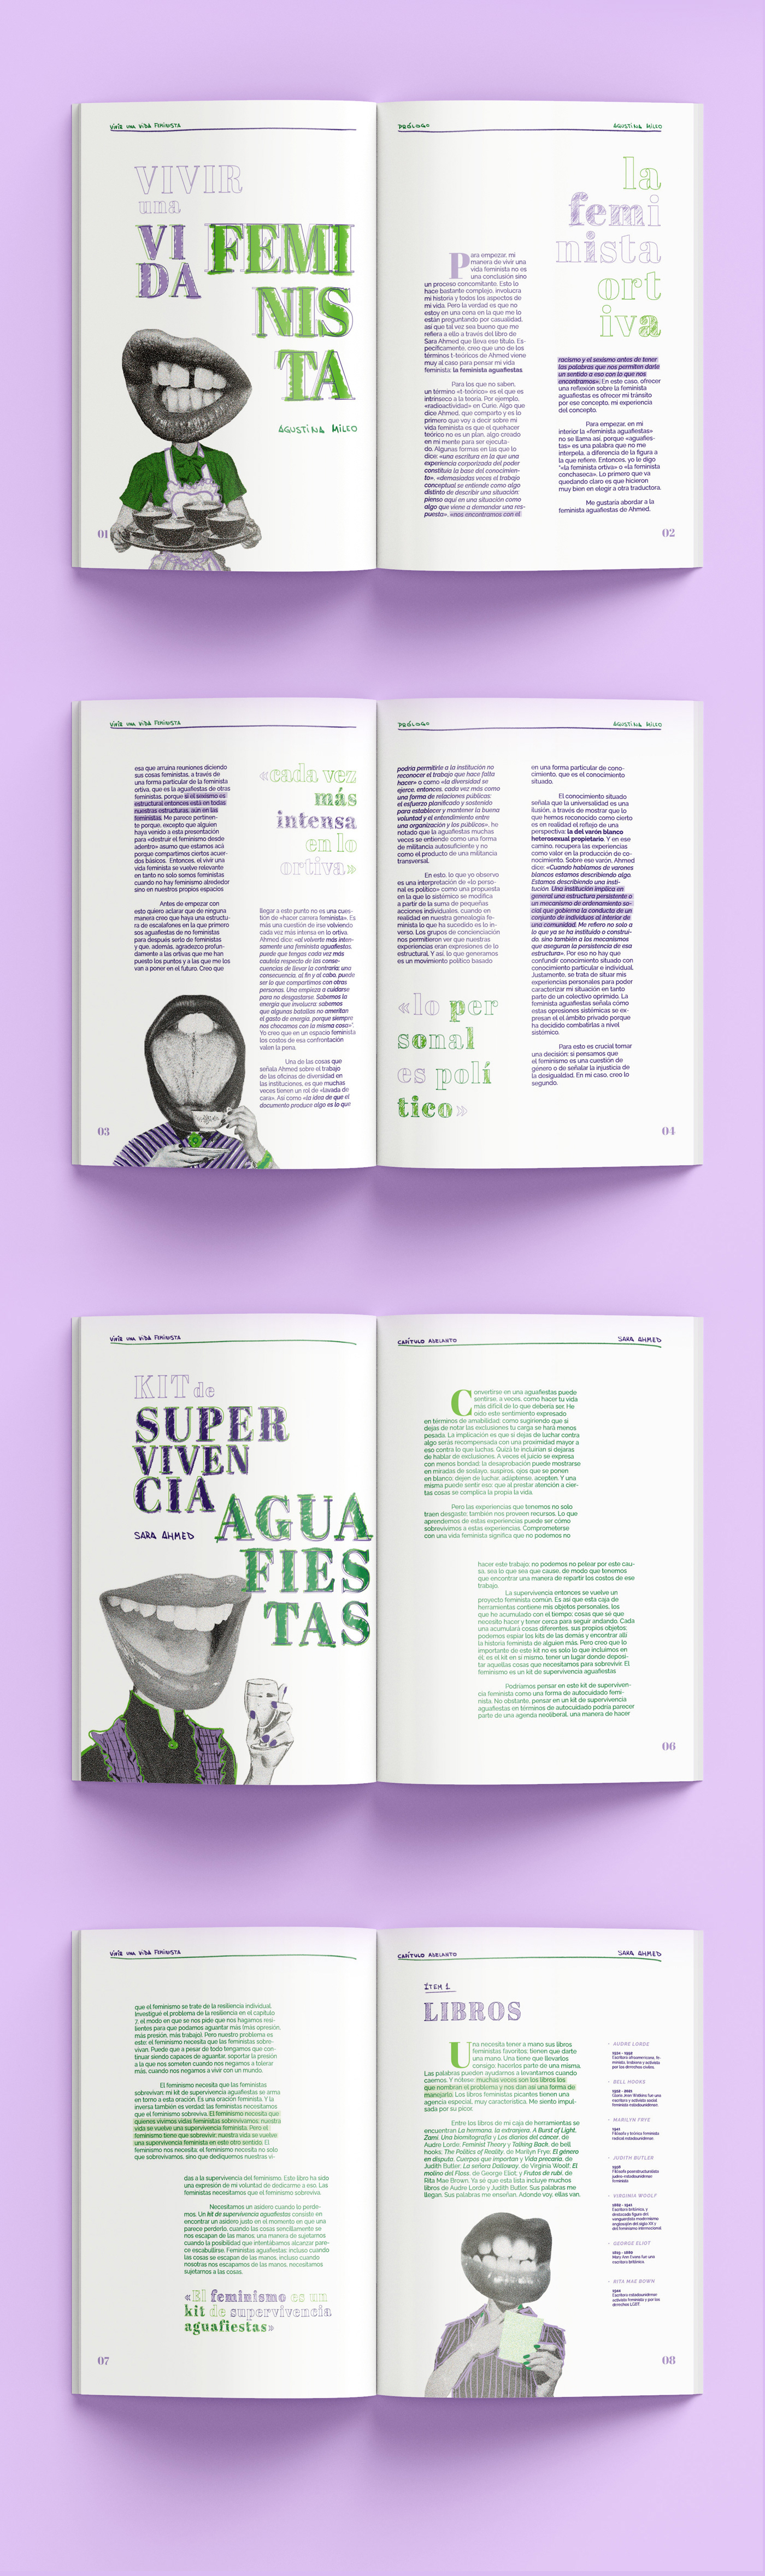 cosgaya editorial fadu feminismo plaquette tipografia Tipografia 2 Tipografía y ediciones typography   uba